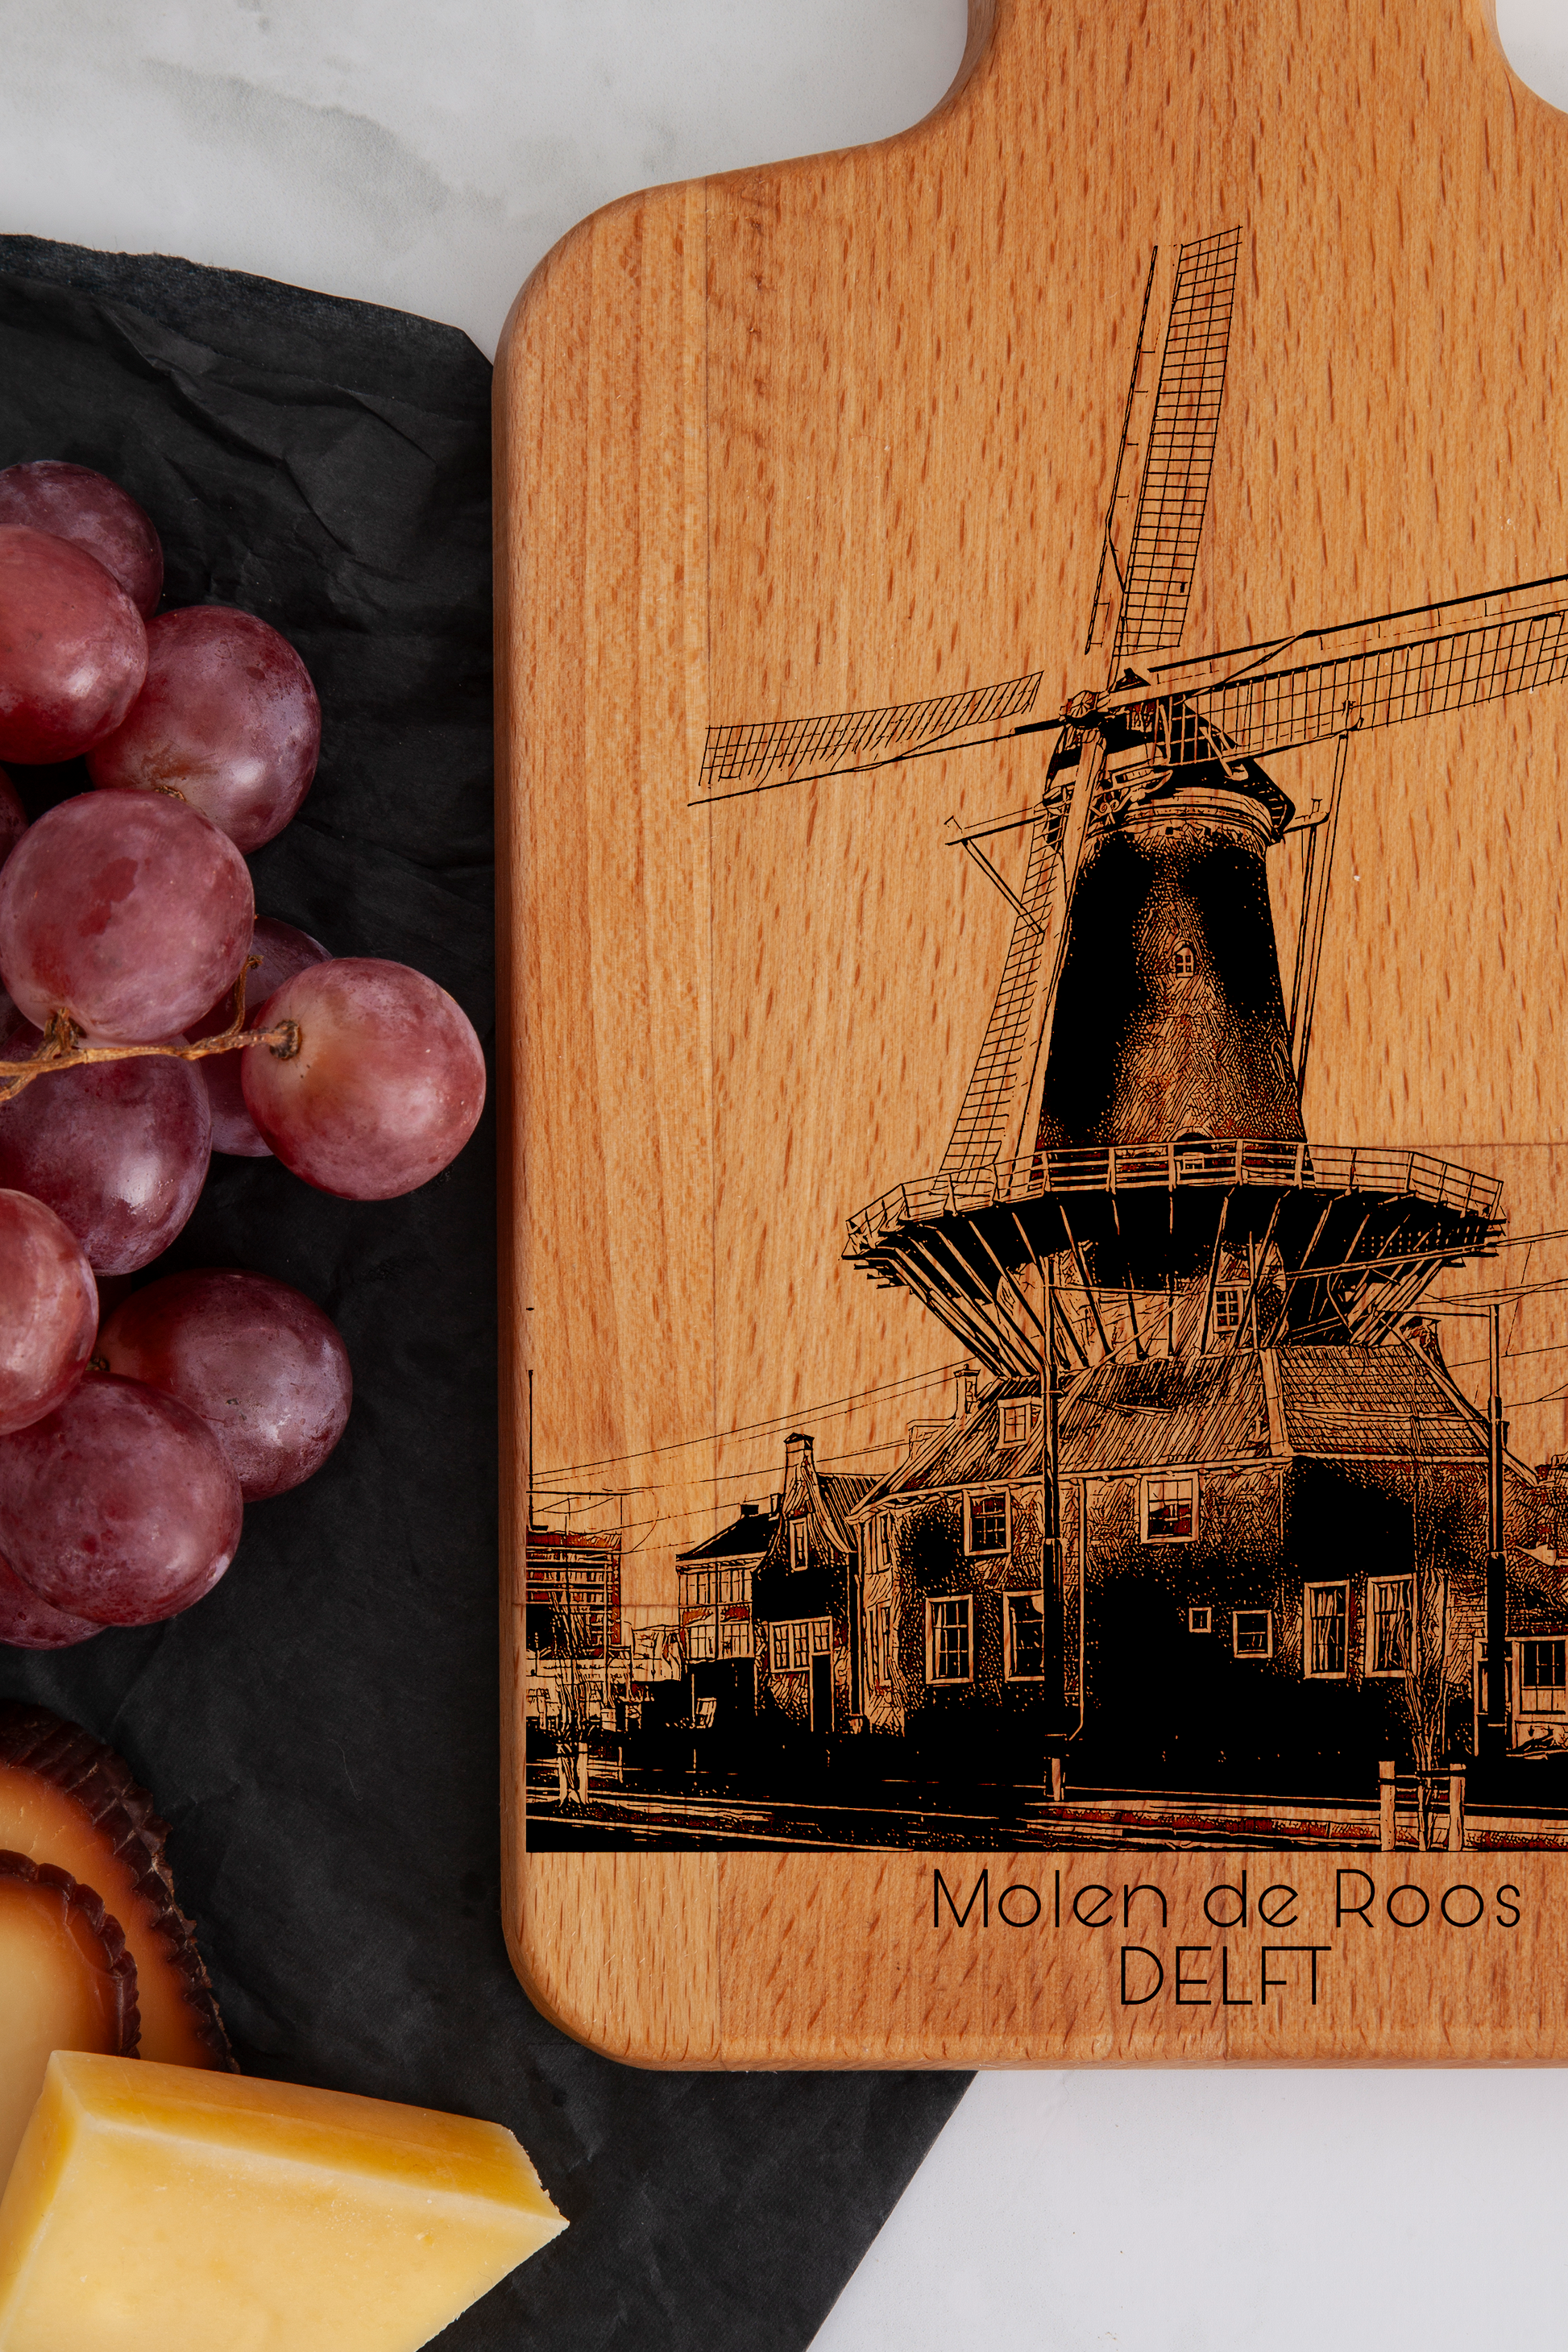 Delft, Molen de Roos, cheese board, close-up